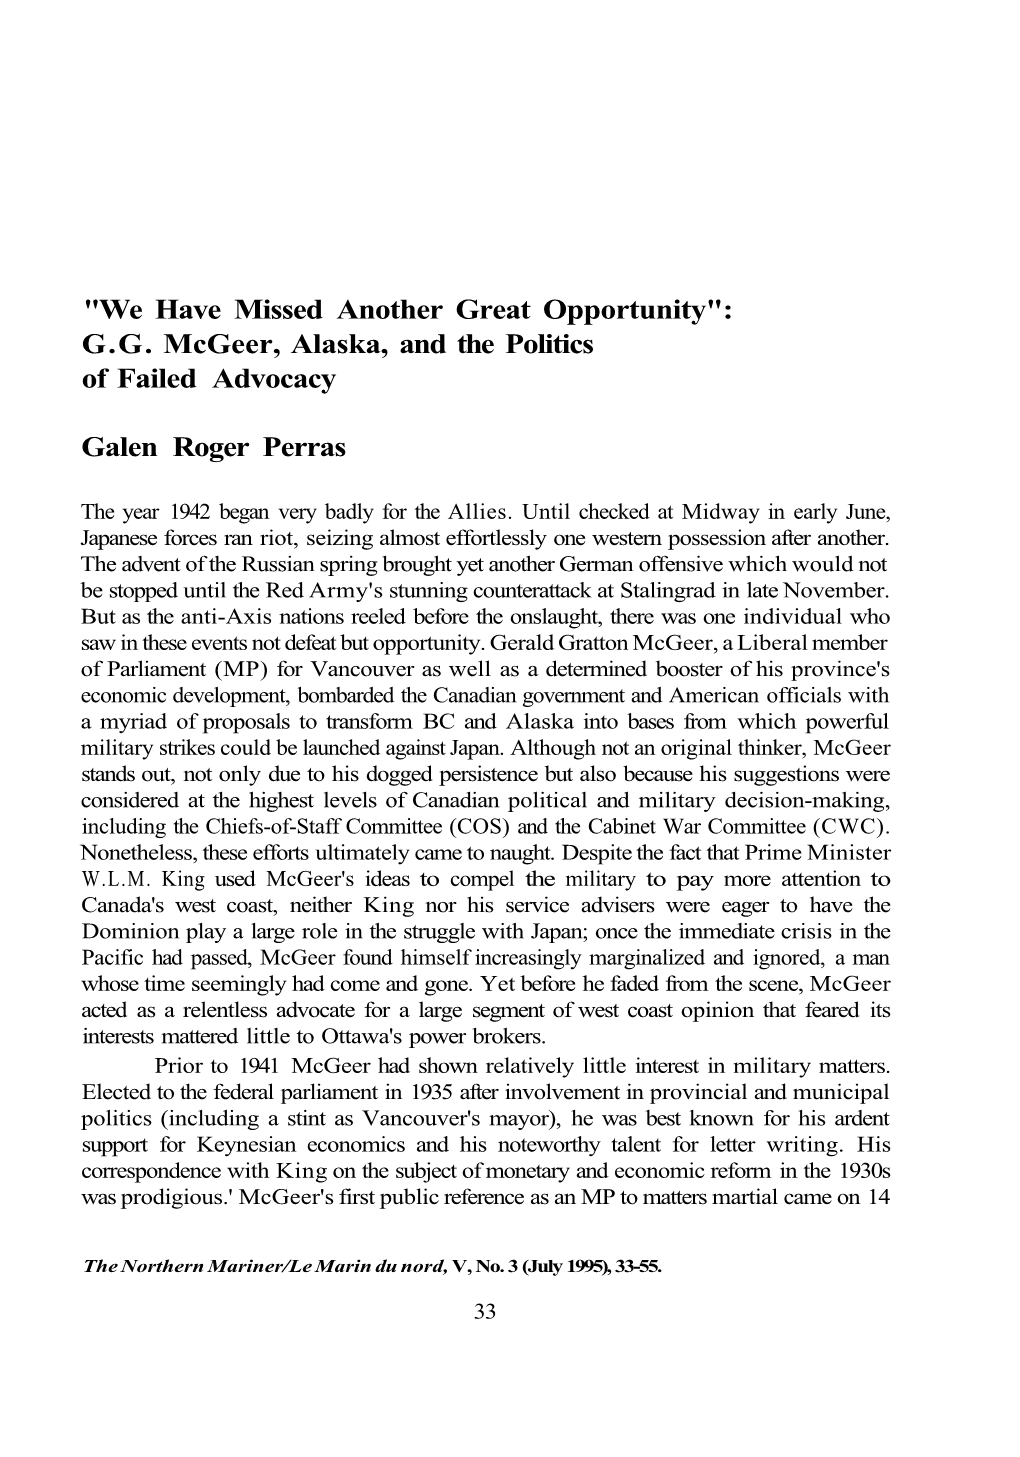 GG Mcgeer, Alaska, and the Politics of Failed Advocacy Galen Roger Perra